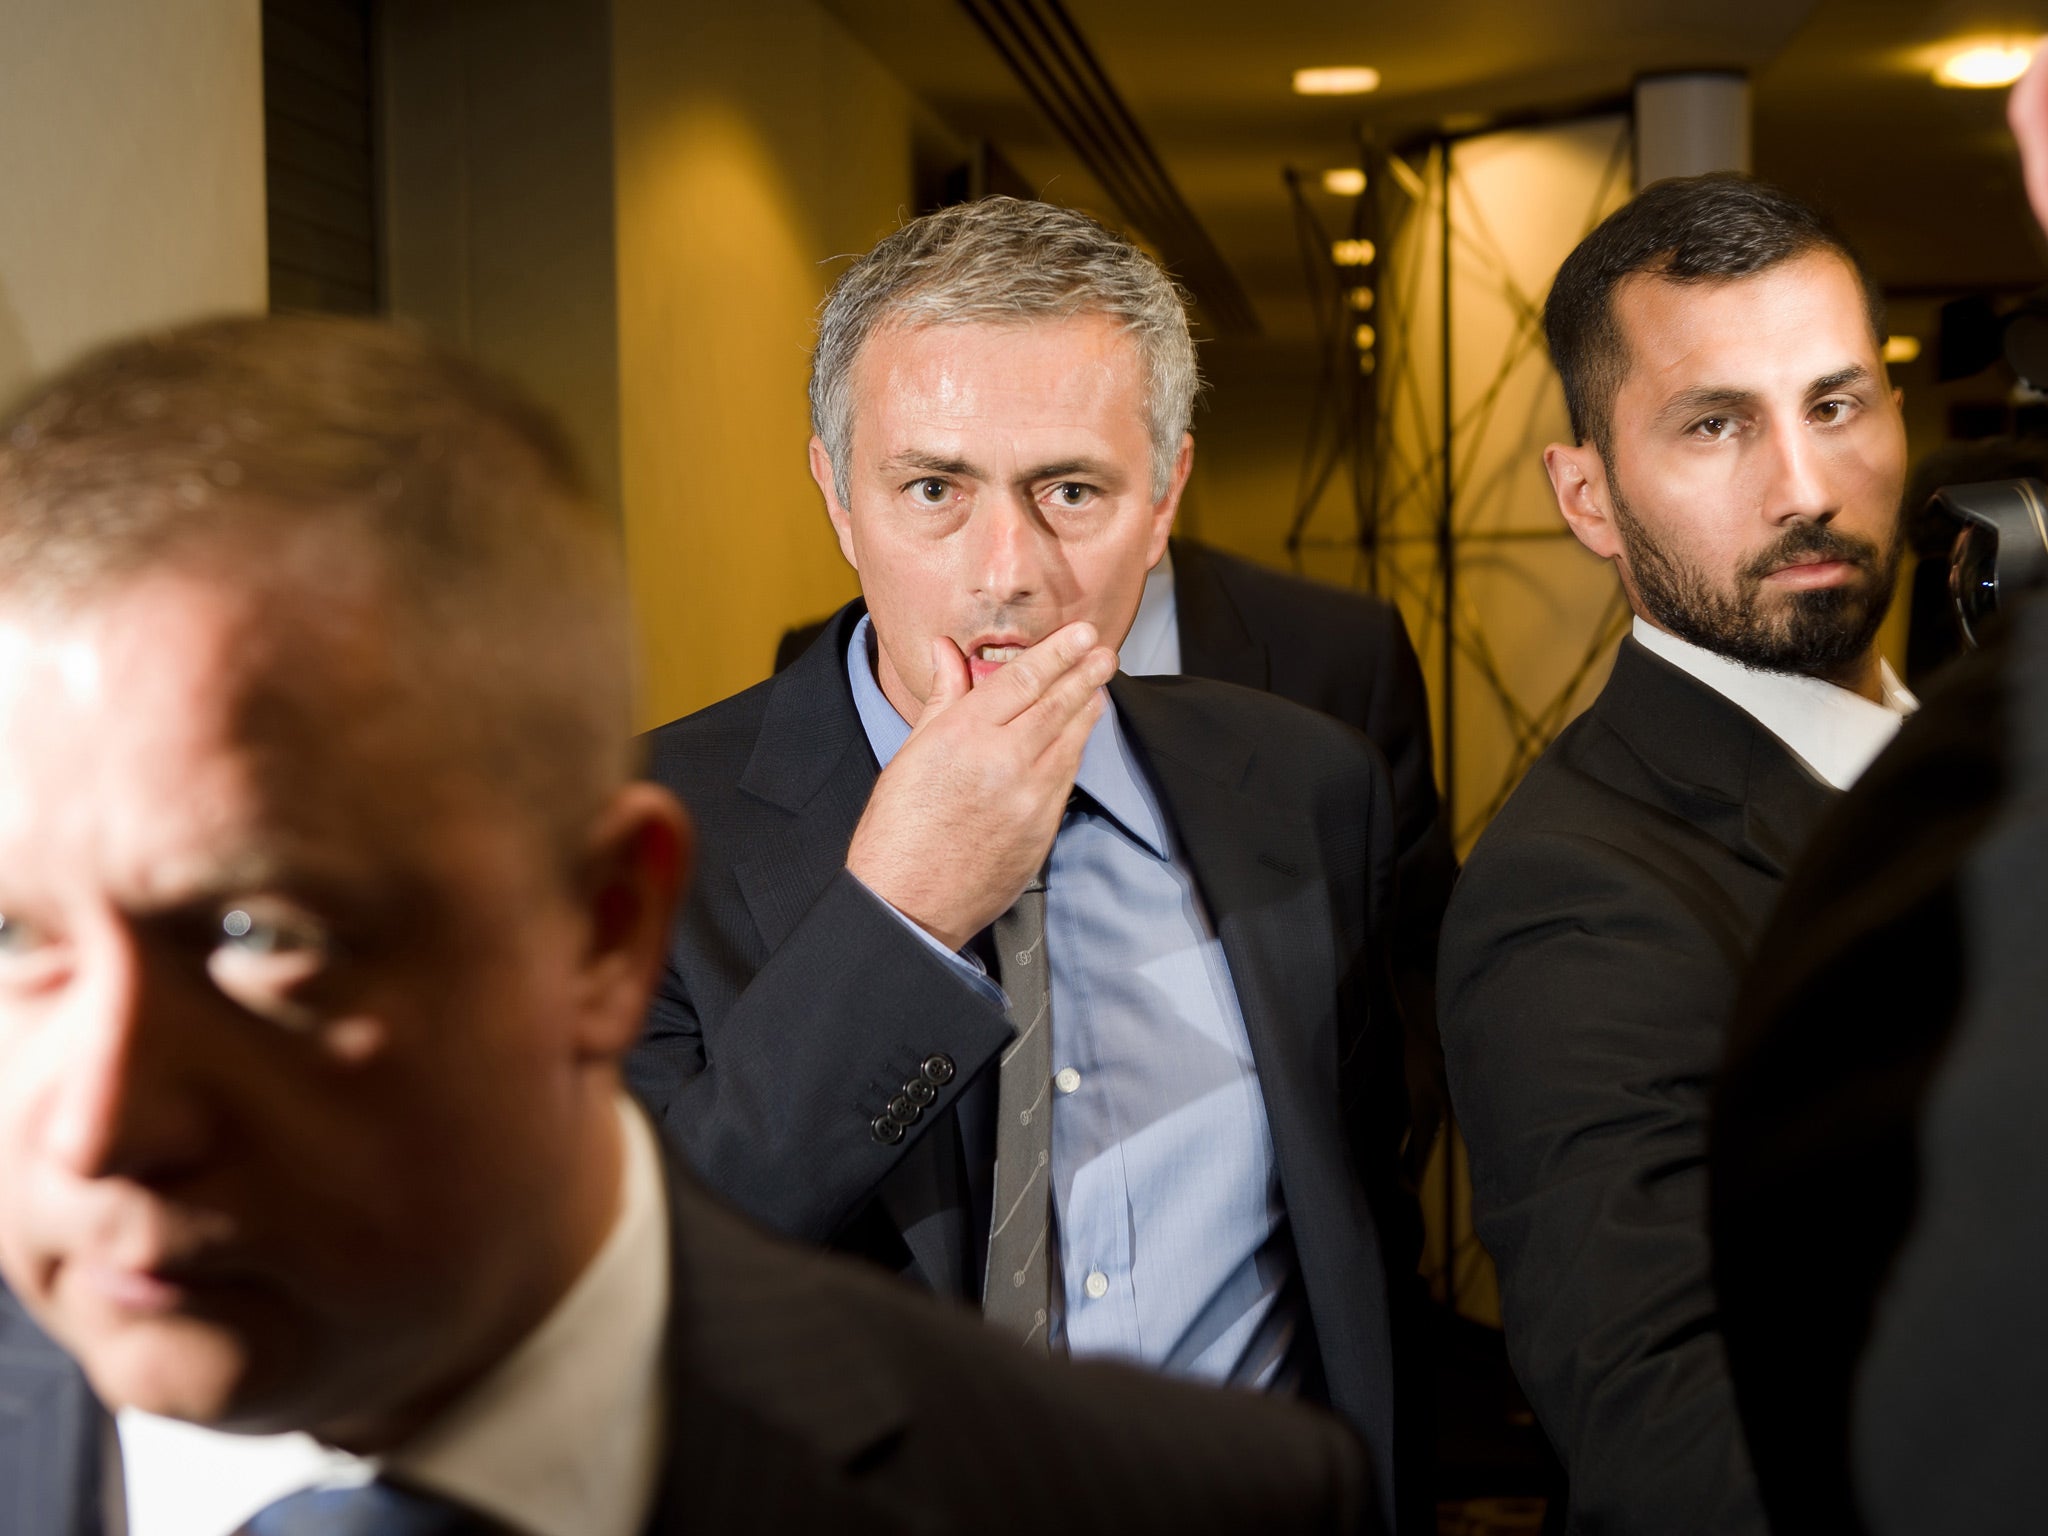 Jose Mourinho leaves after addressing the press